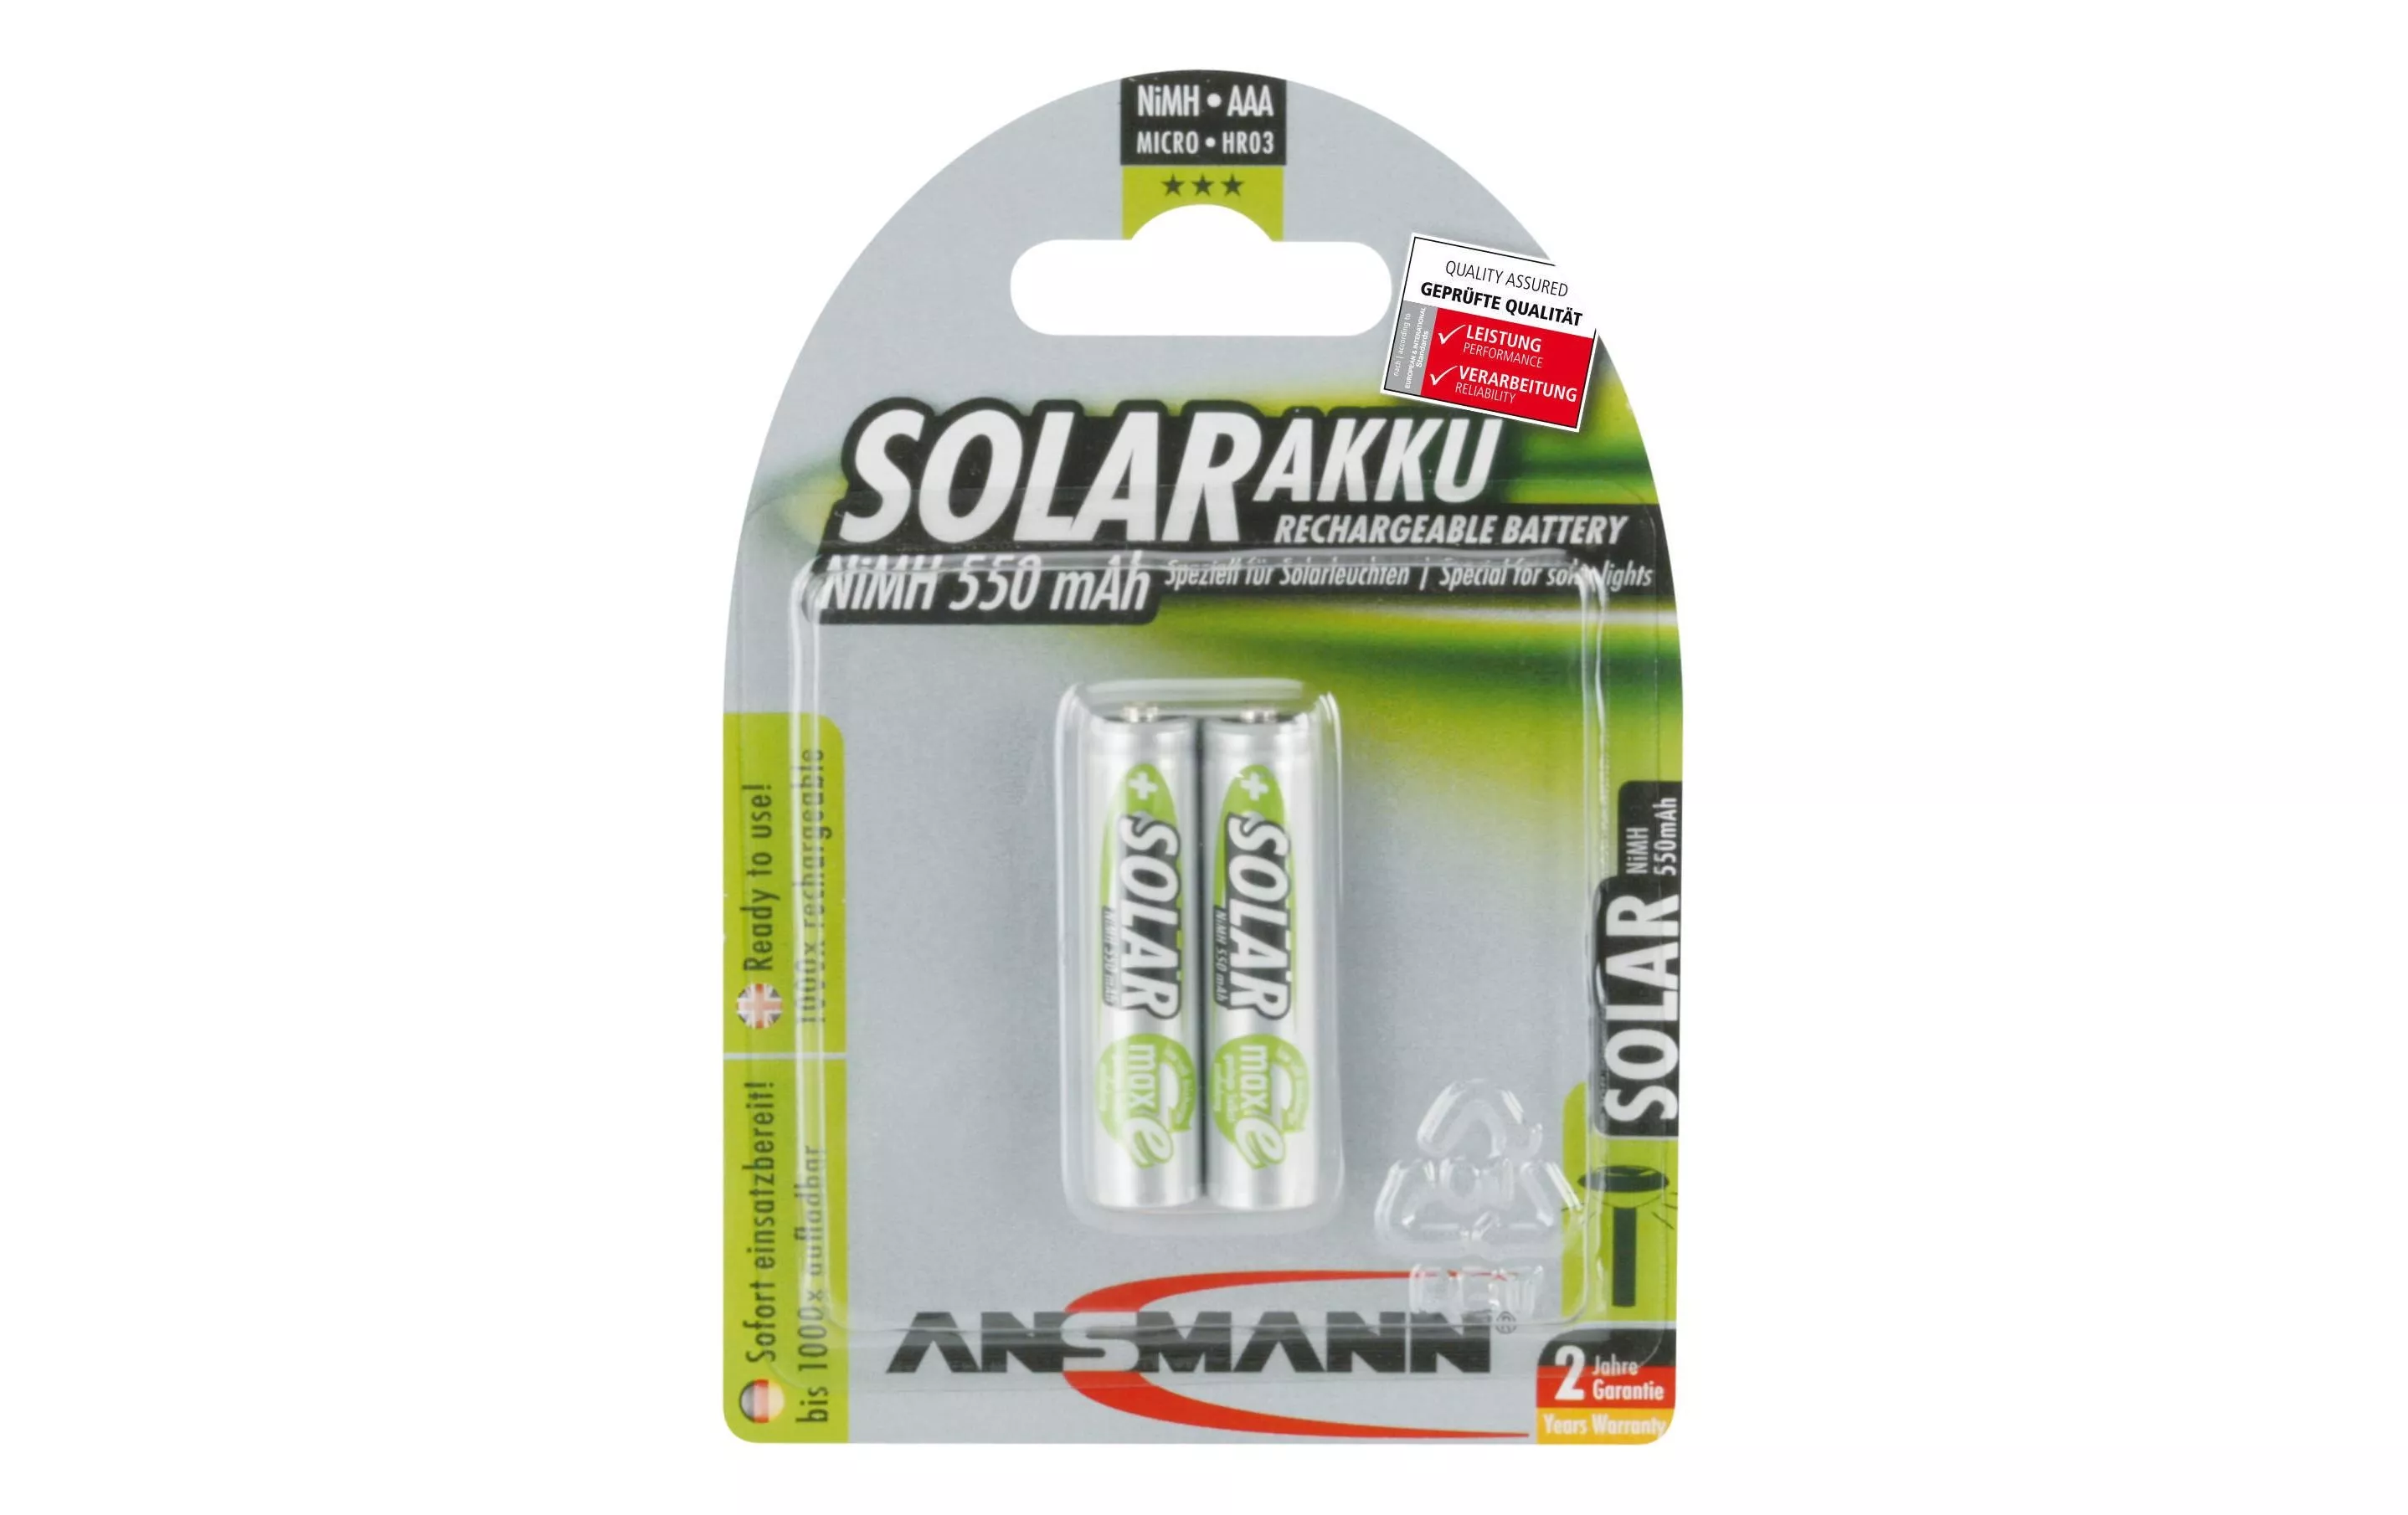 Batteria ricaricabile Ansmann 2x AAA 550 mAh per applicazioni solari